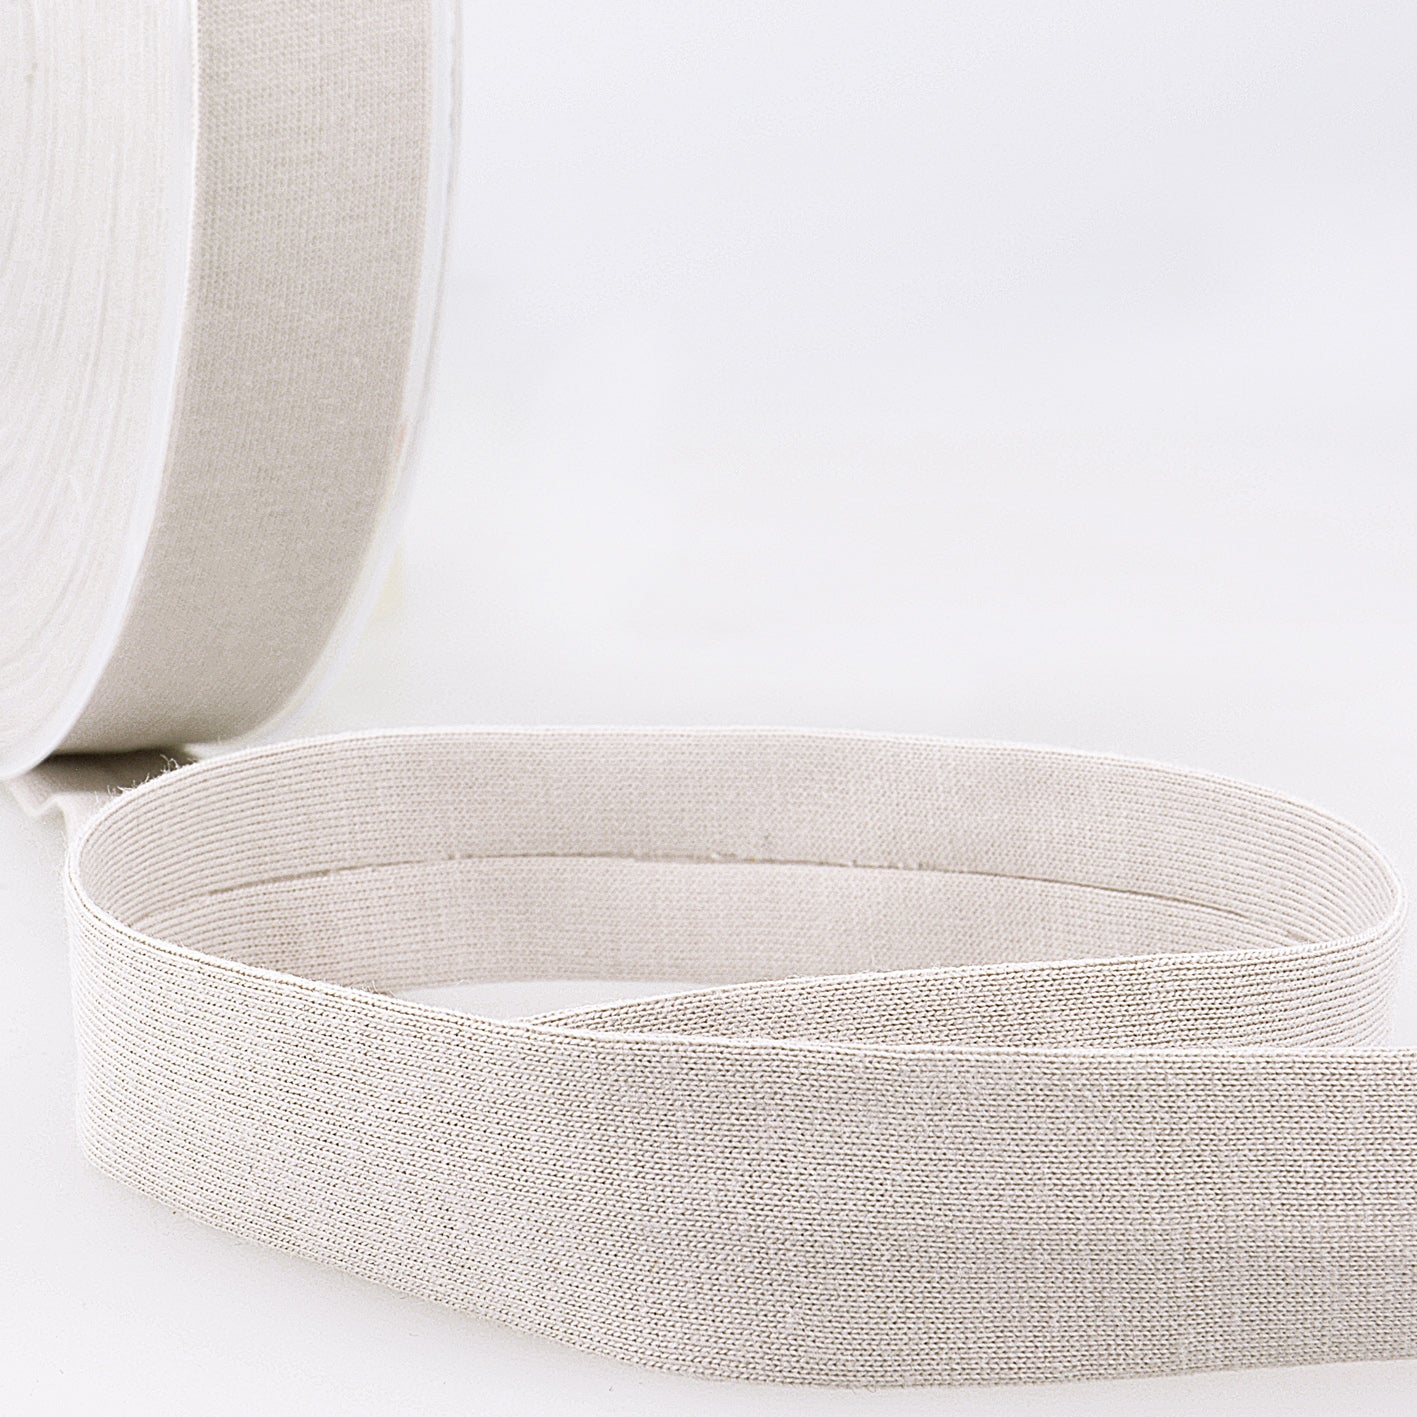 20mm Cotton Jersey Knit Bias Binding